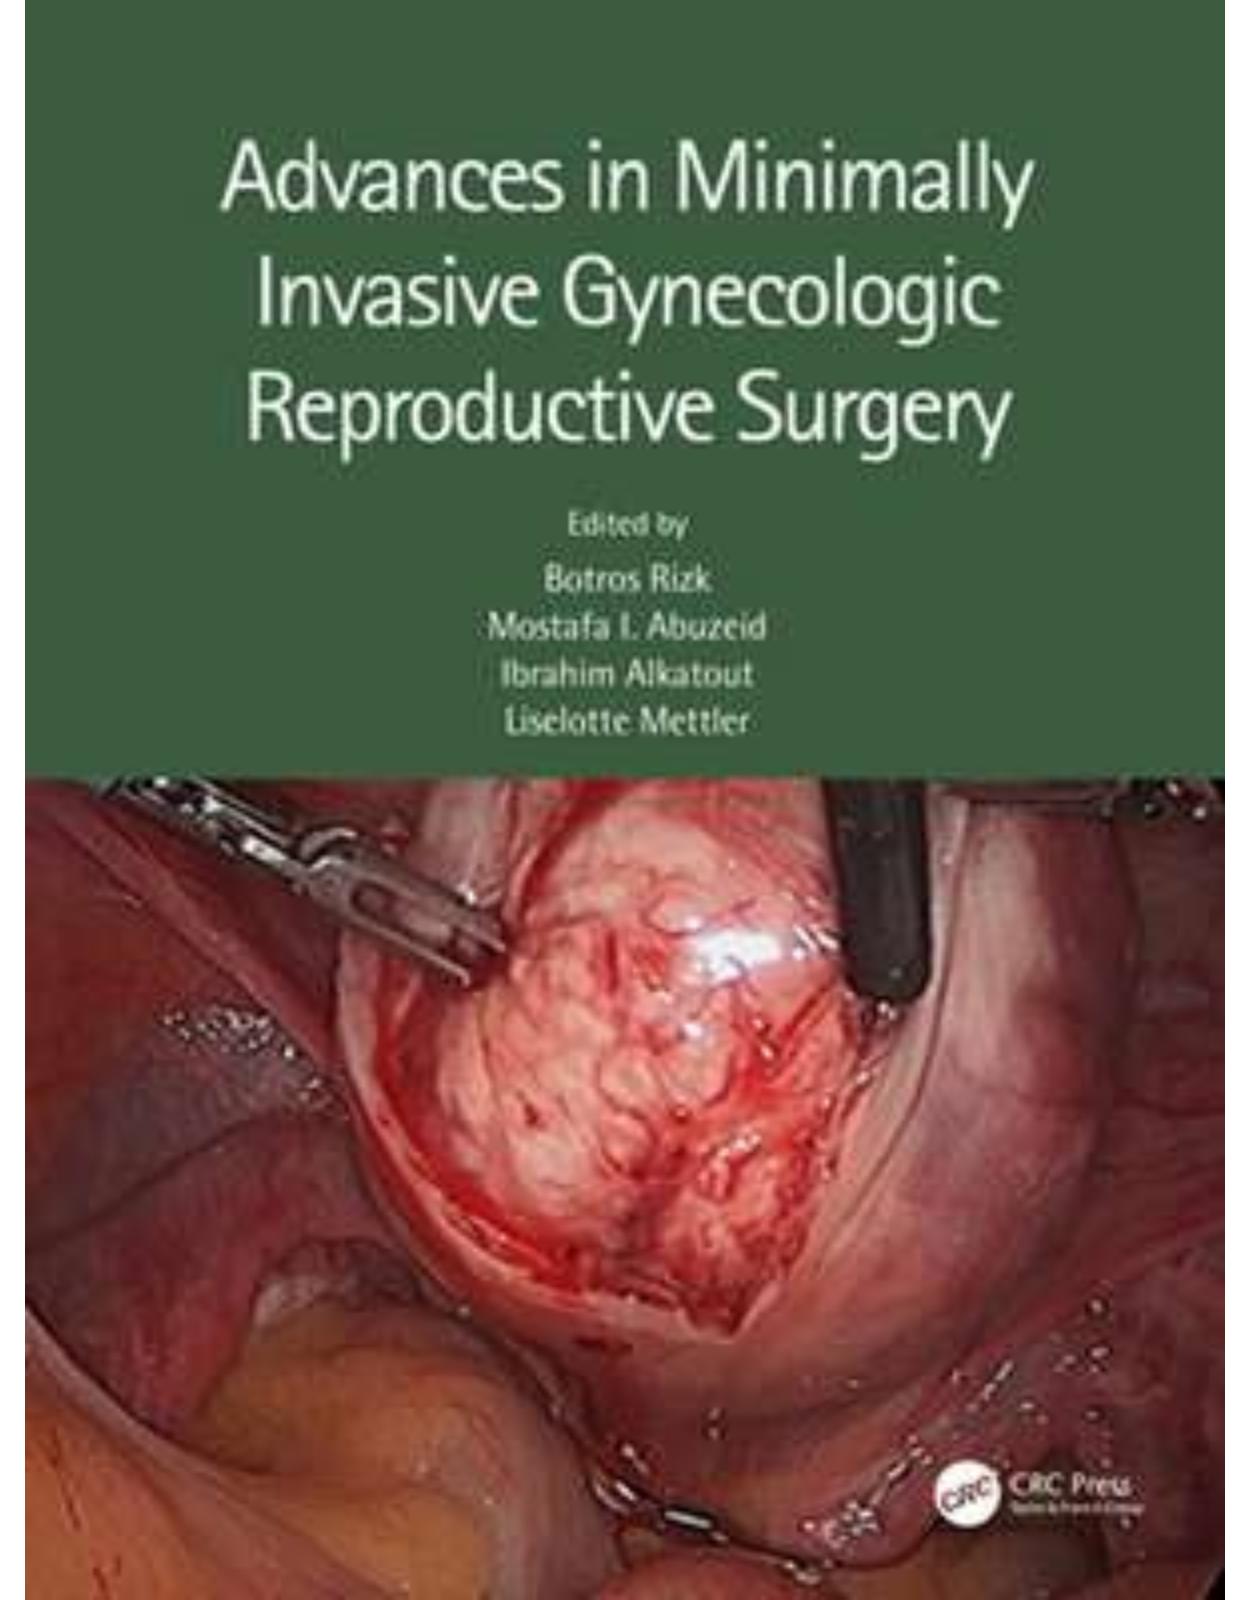 Advances in Minimally Invasive Gynecologic Reproductiv Surgery